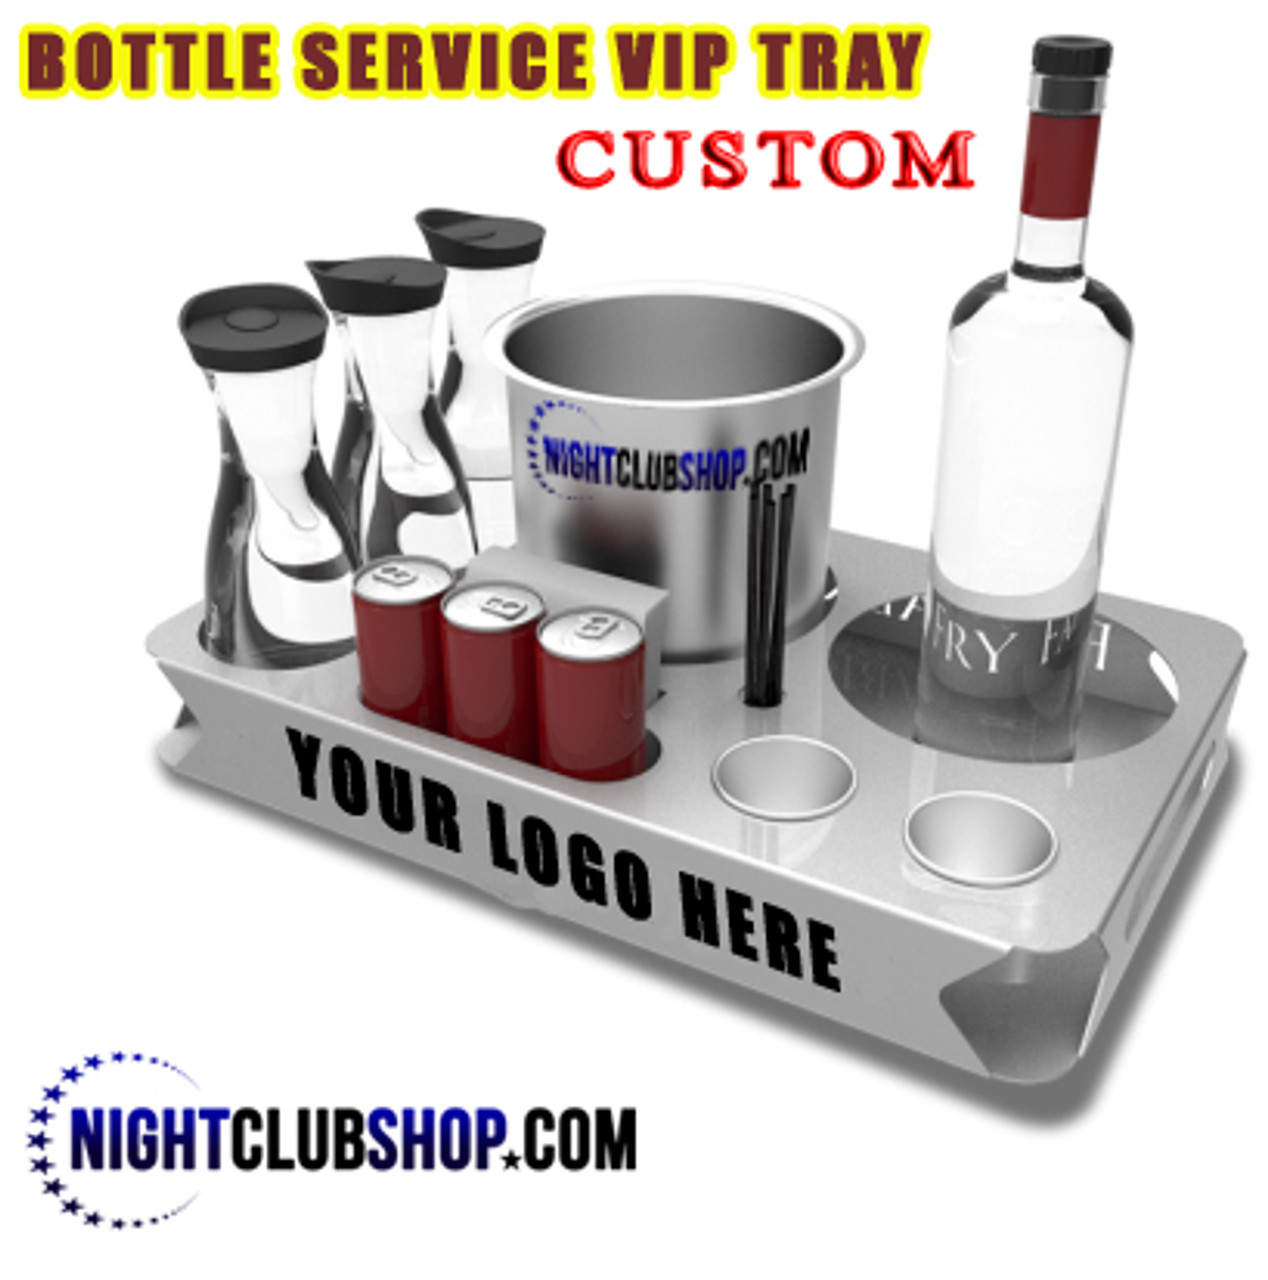 Energy, Large, Bottle, Service, delivery,champagne, liquor, brand,tray, VIP, branded, Bottle Kit, bottle Tray
Nightclub,Lounge,Bar, Kit,Bar
